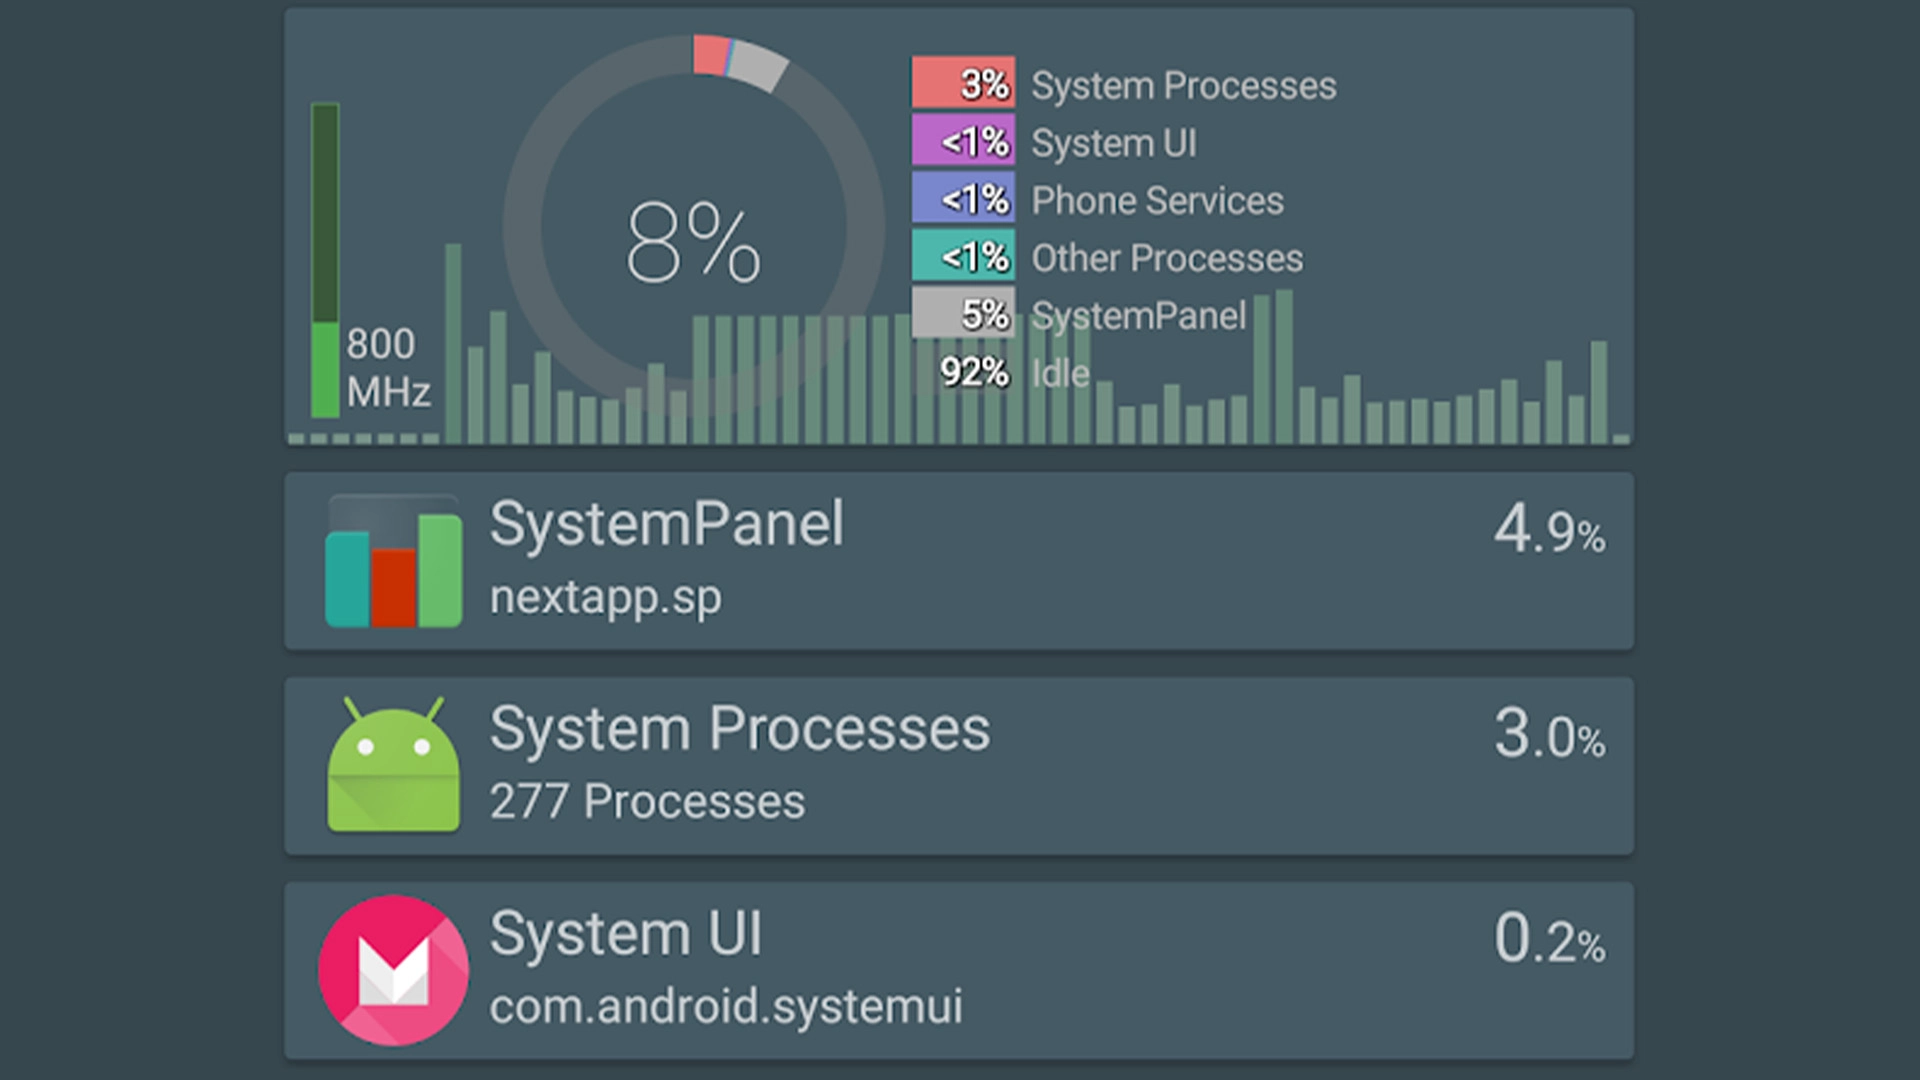 SystemPanel 2 best task managers for Android - افسانه هایی در مورد فناوری که باید فراموش کرد